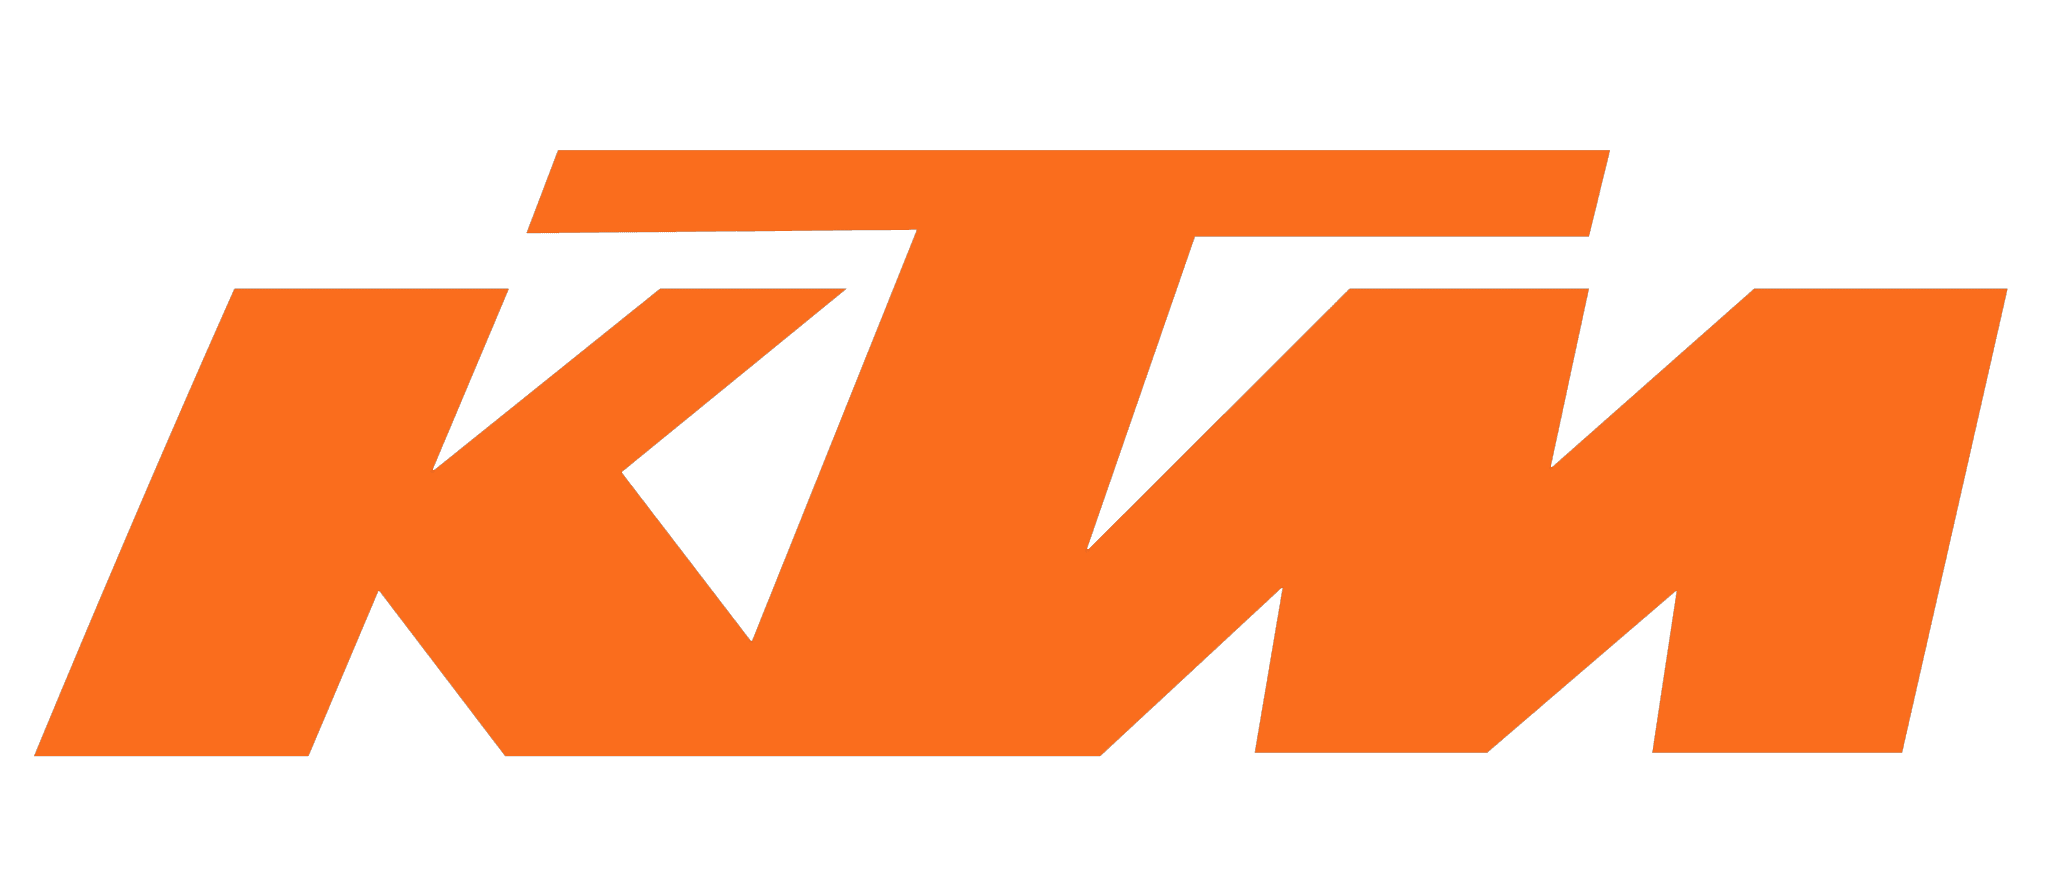 KTM-Logo-Design-Vector-Free-Download copy